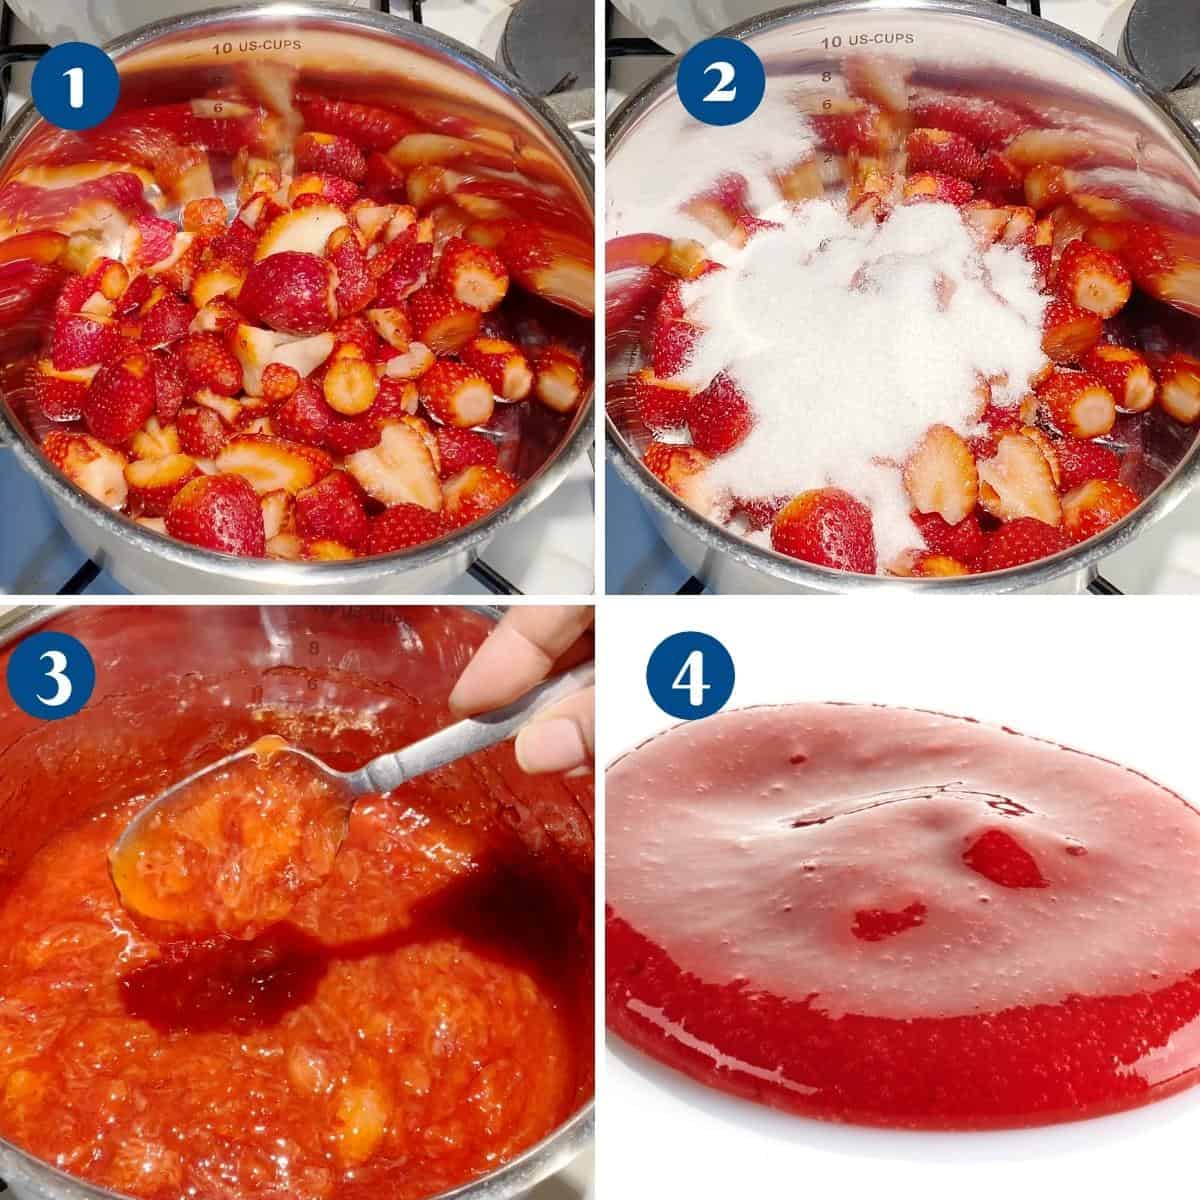 Progress pictures making the strawberry jello.